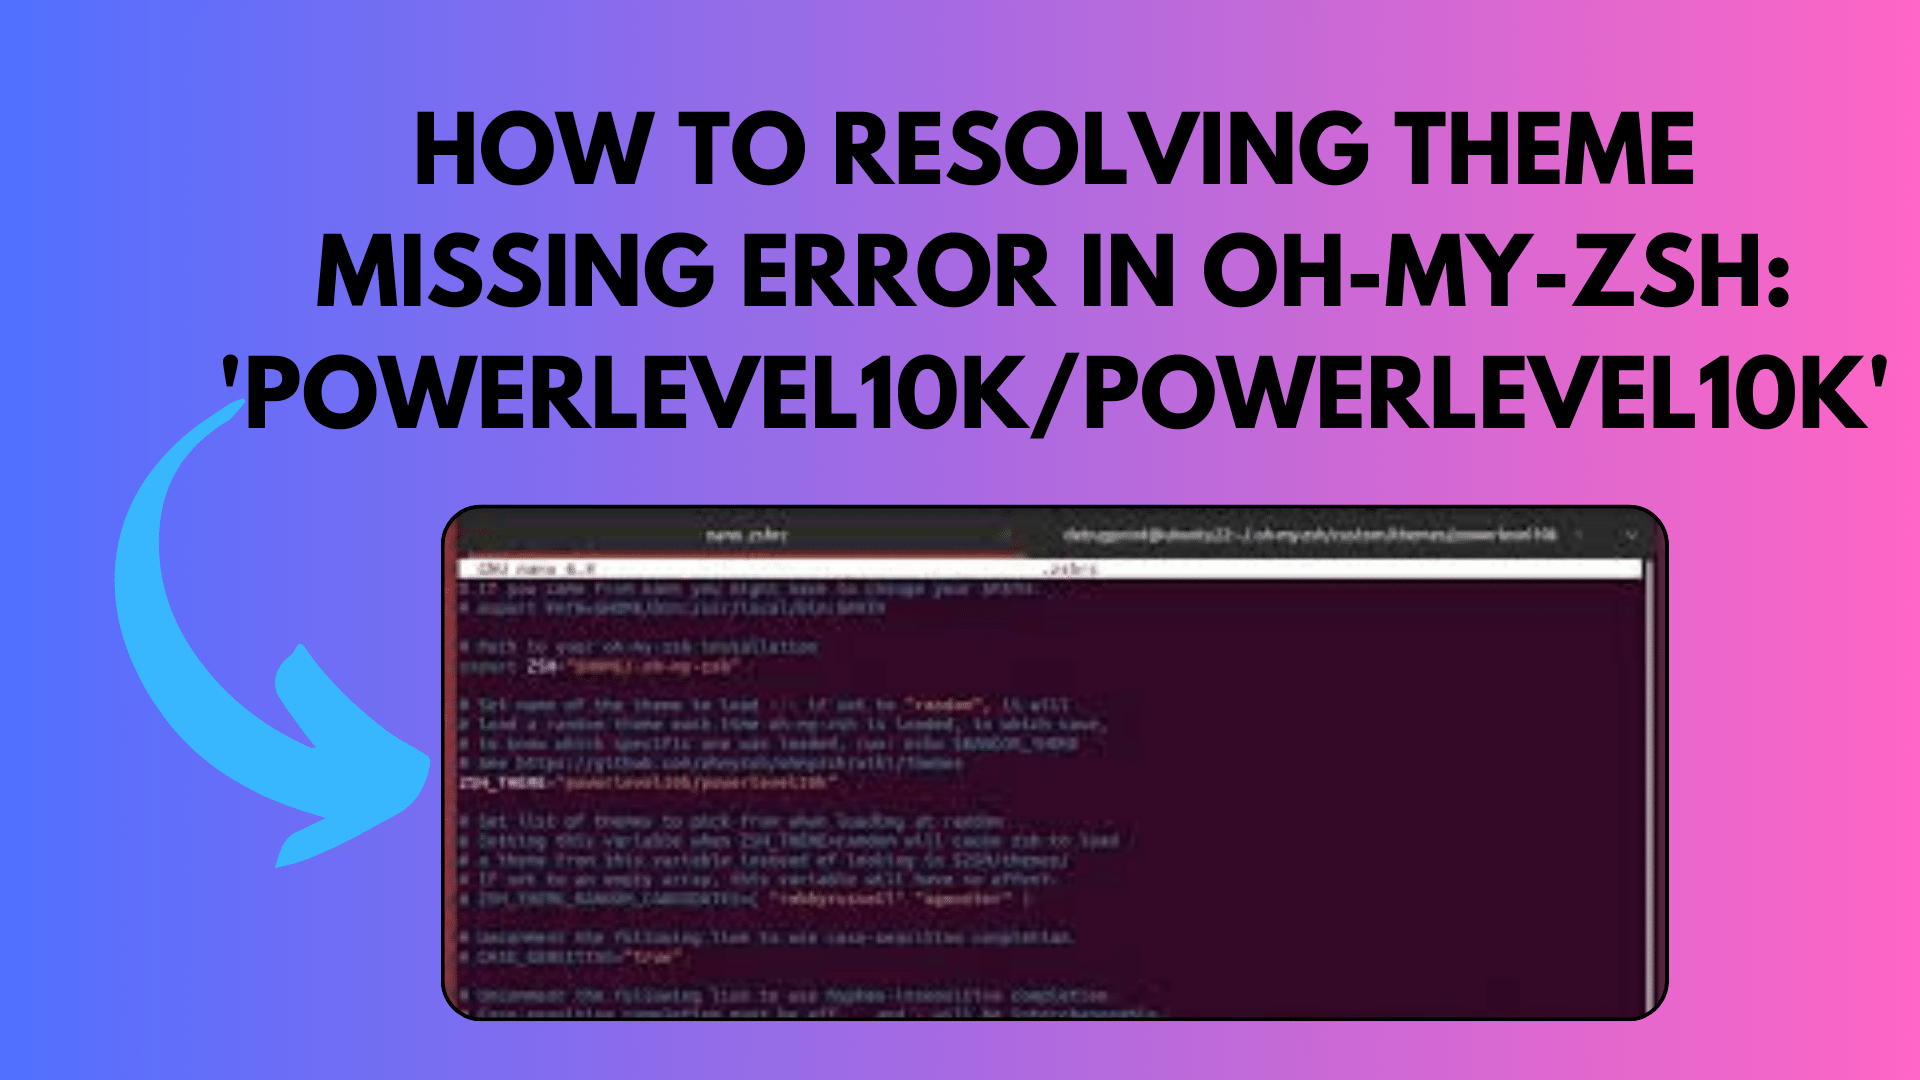 How To Resolving Theme Missing Error in Oh-My-Zsh: 'powerlevel10k/powerlevel10k'